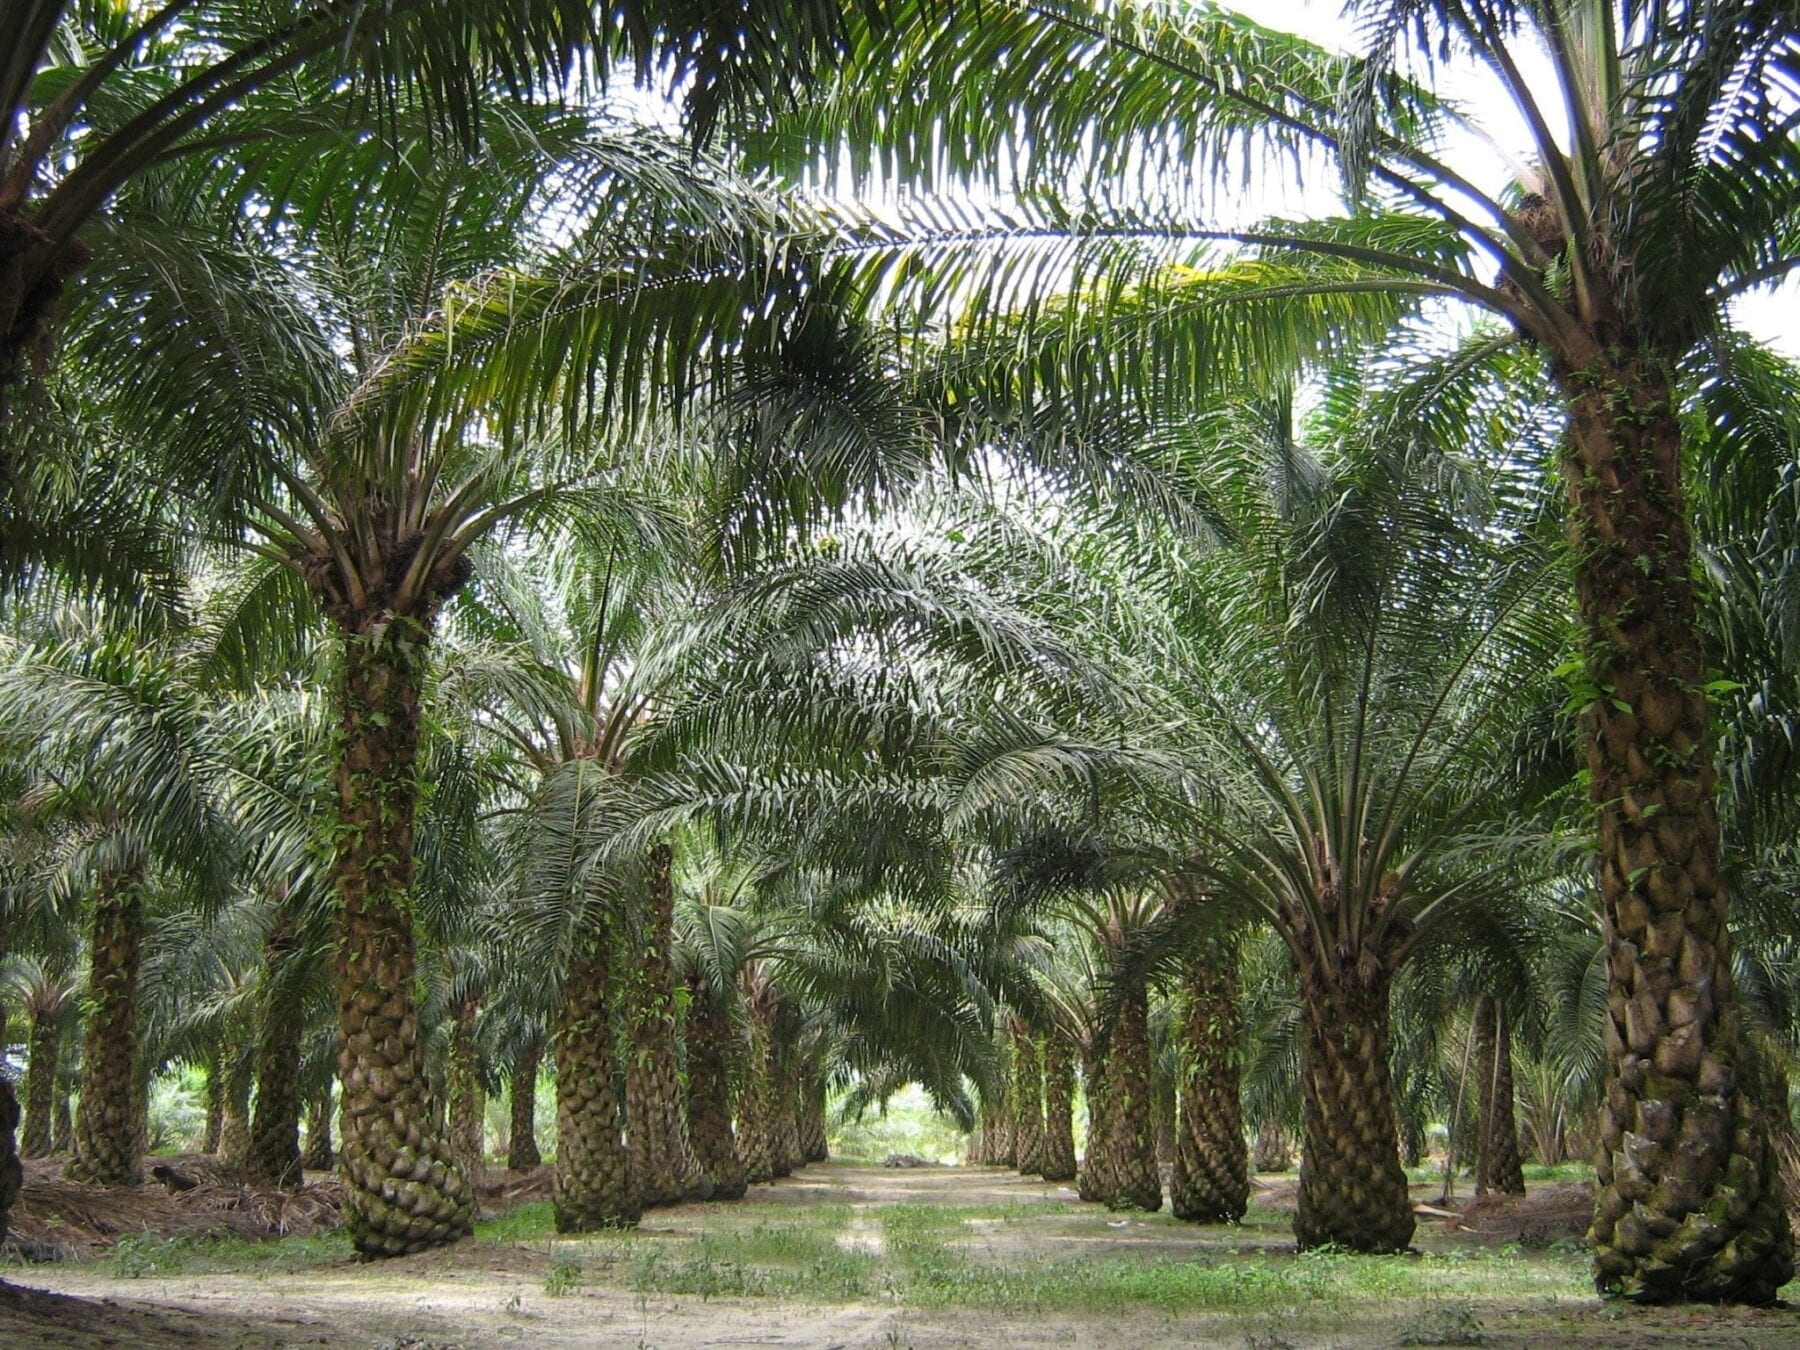 Oil palm offers cheap biofuels and bioplastics